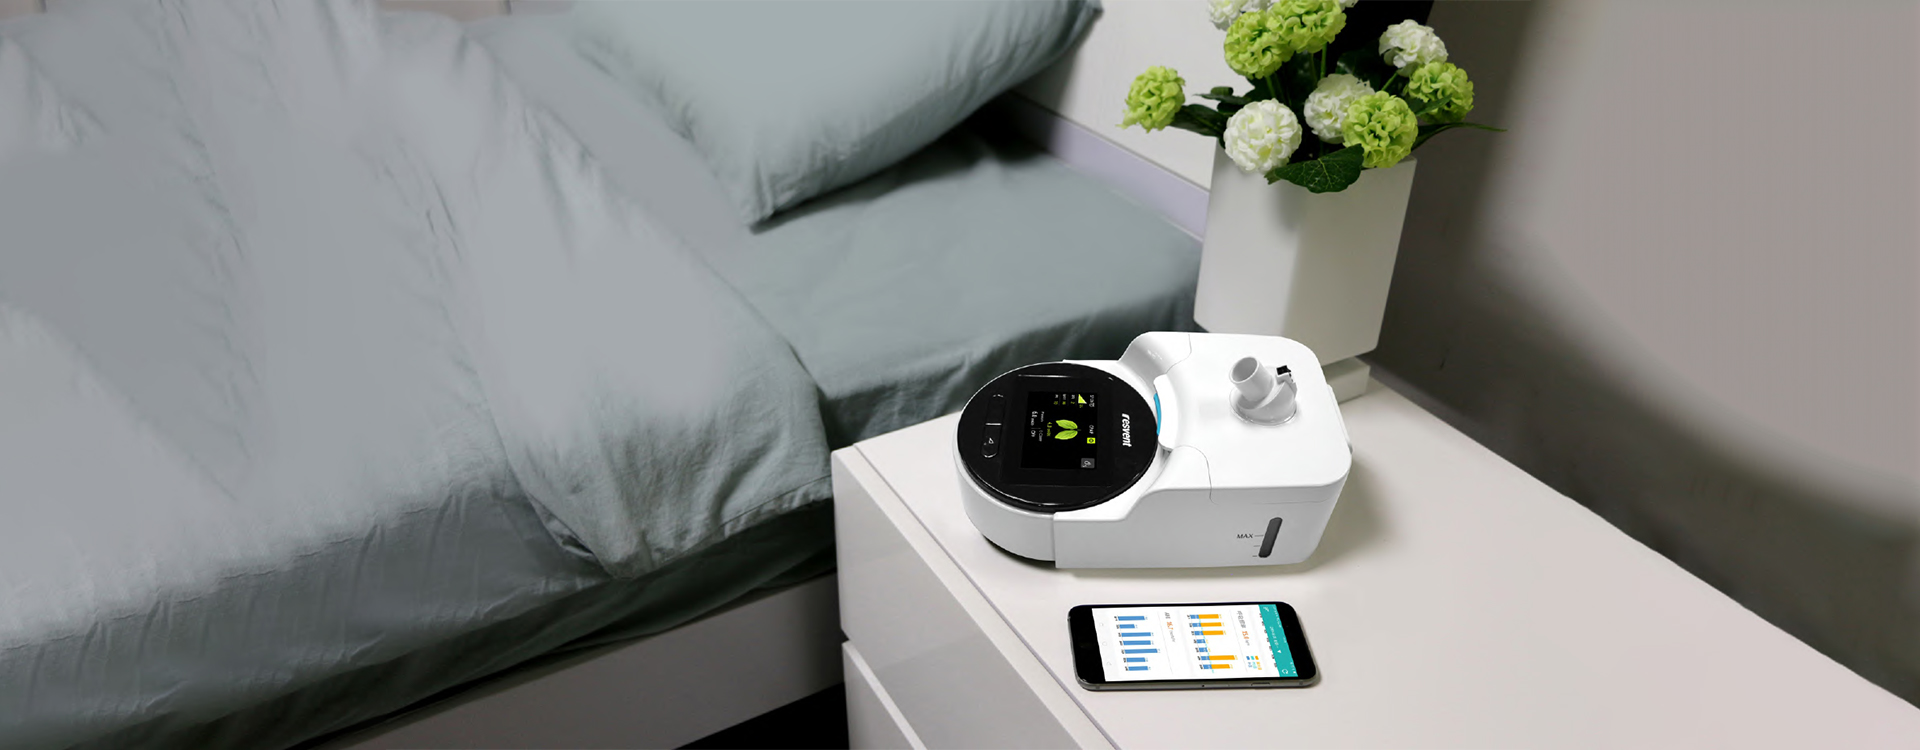 CPAP Machines for Sleep Apnea-Resvent iBreeze Series-Resvent ...